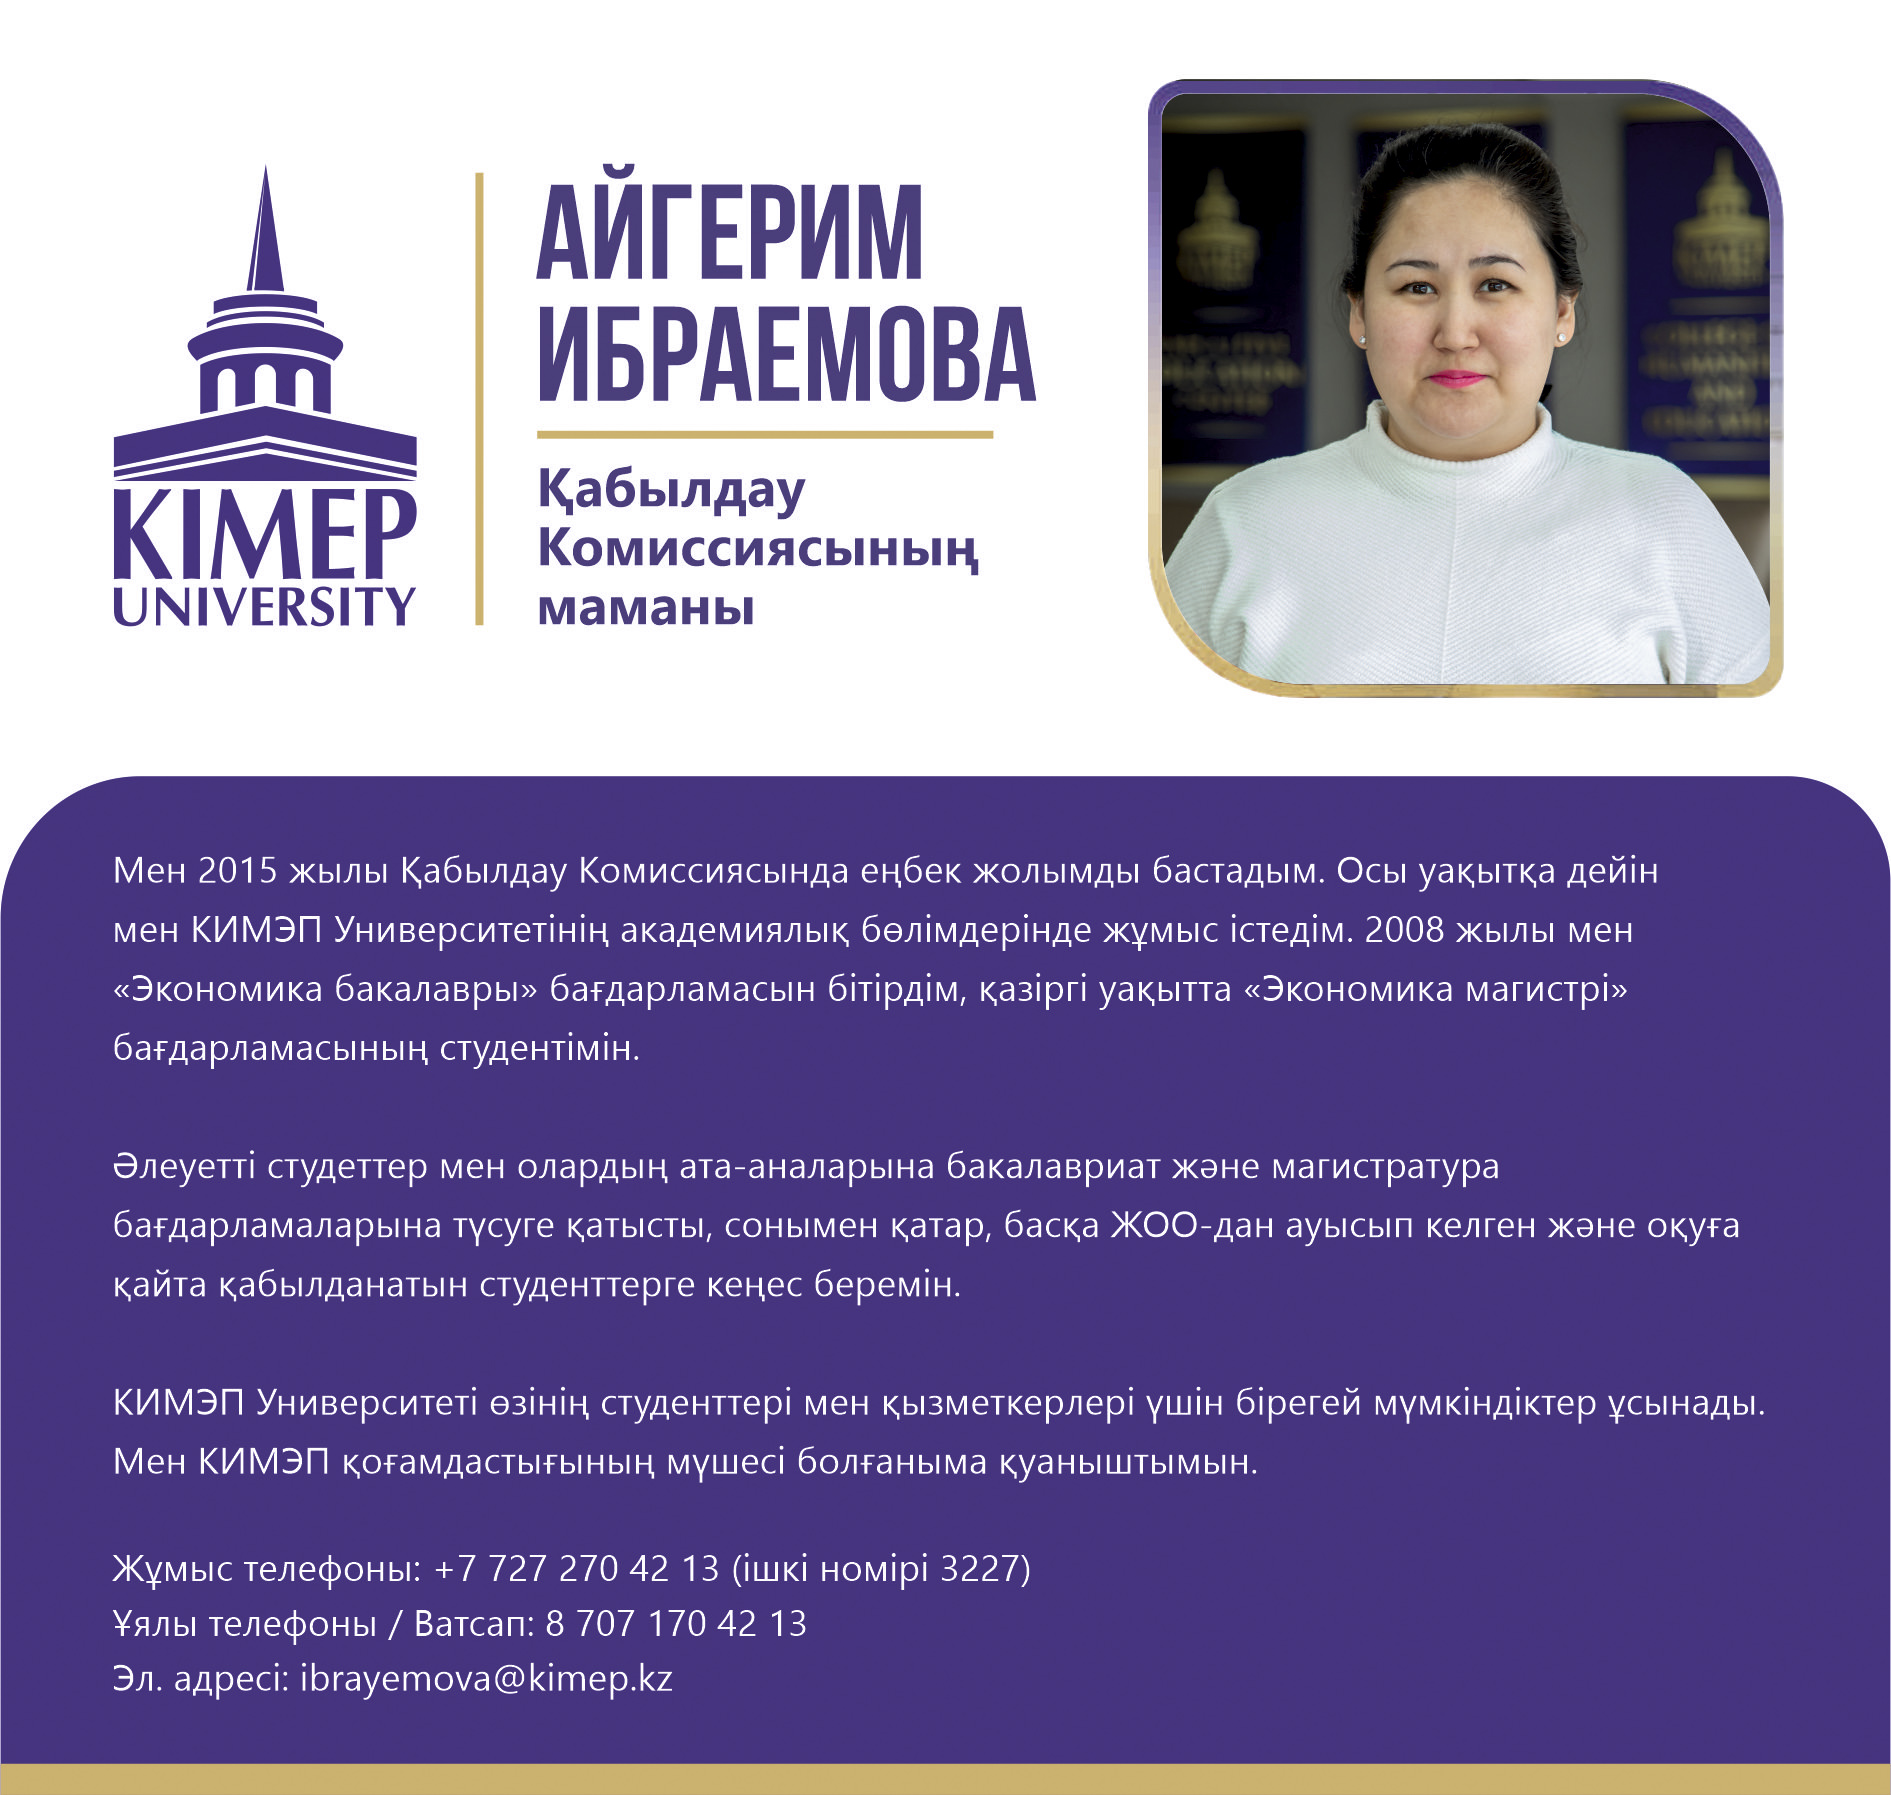 Admission Profile for Aigerim Ibrayemova eng